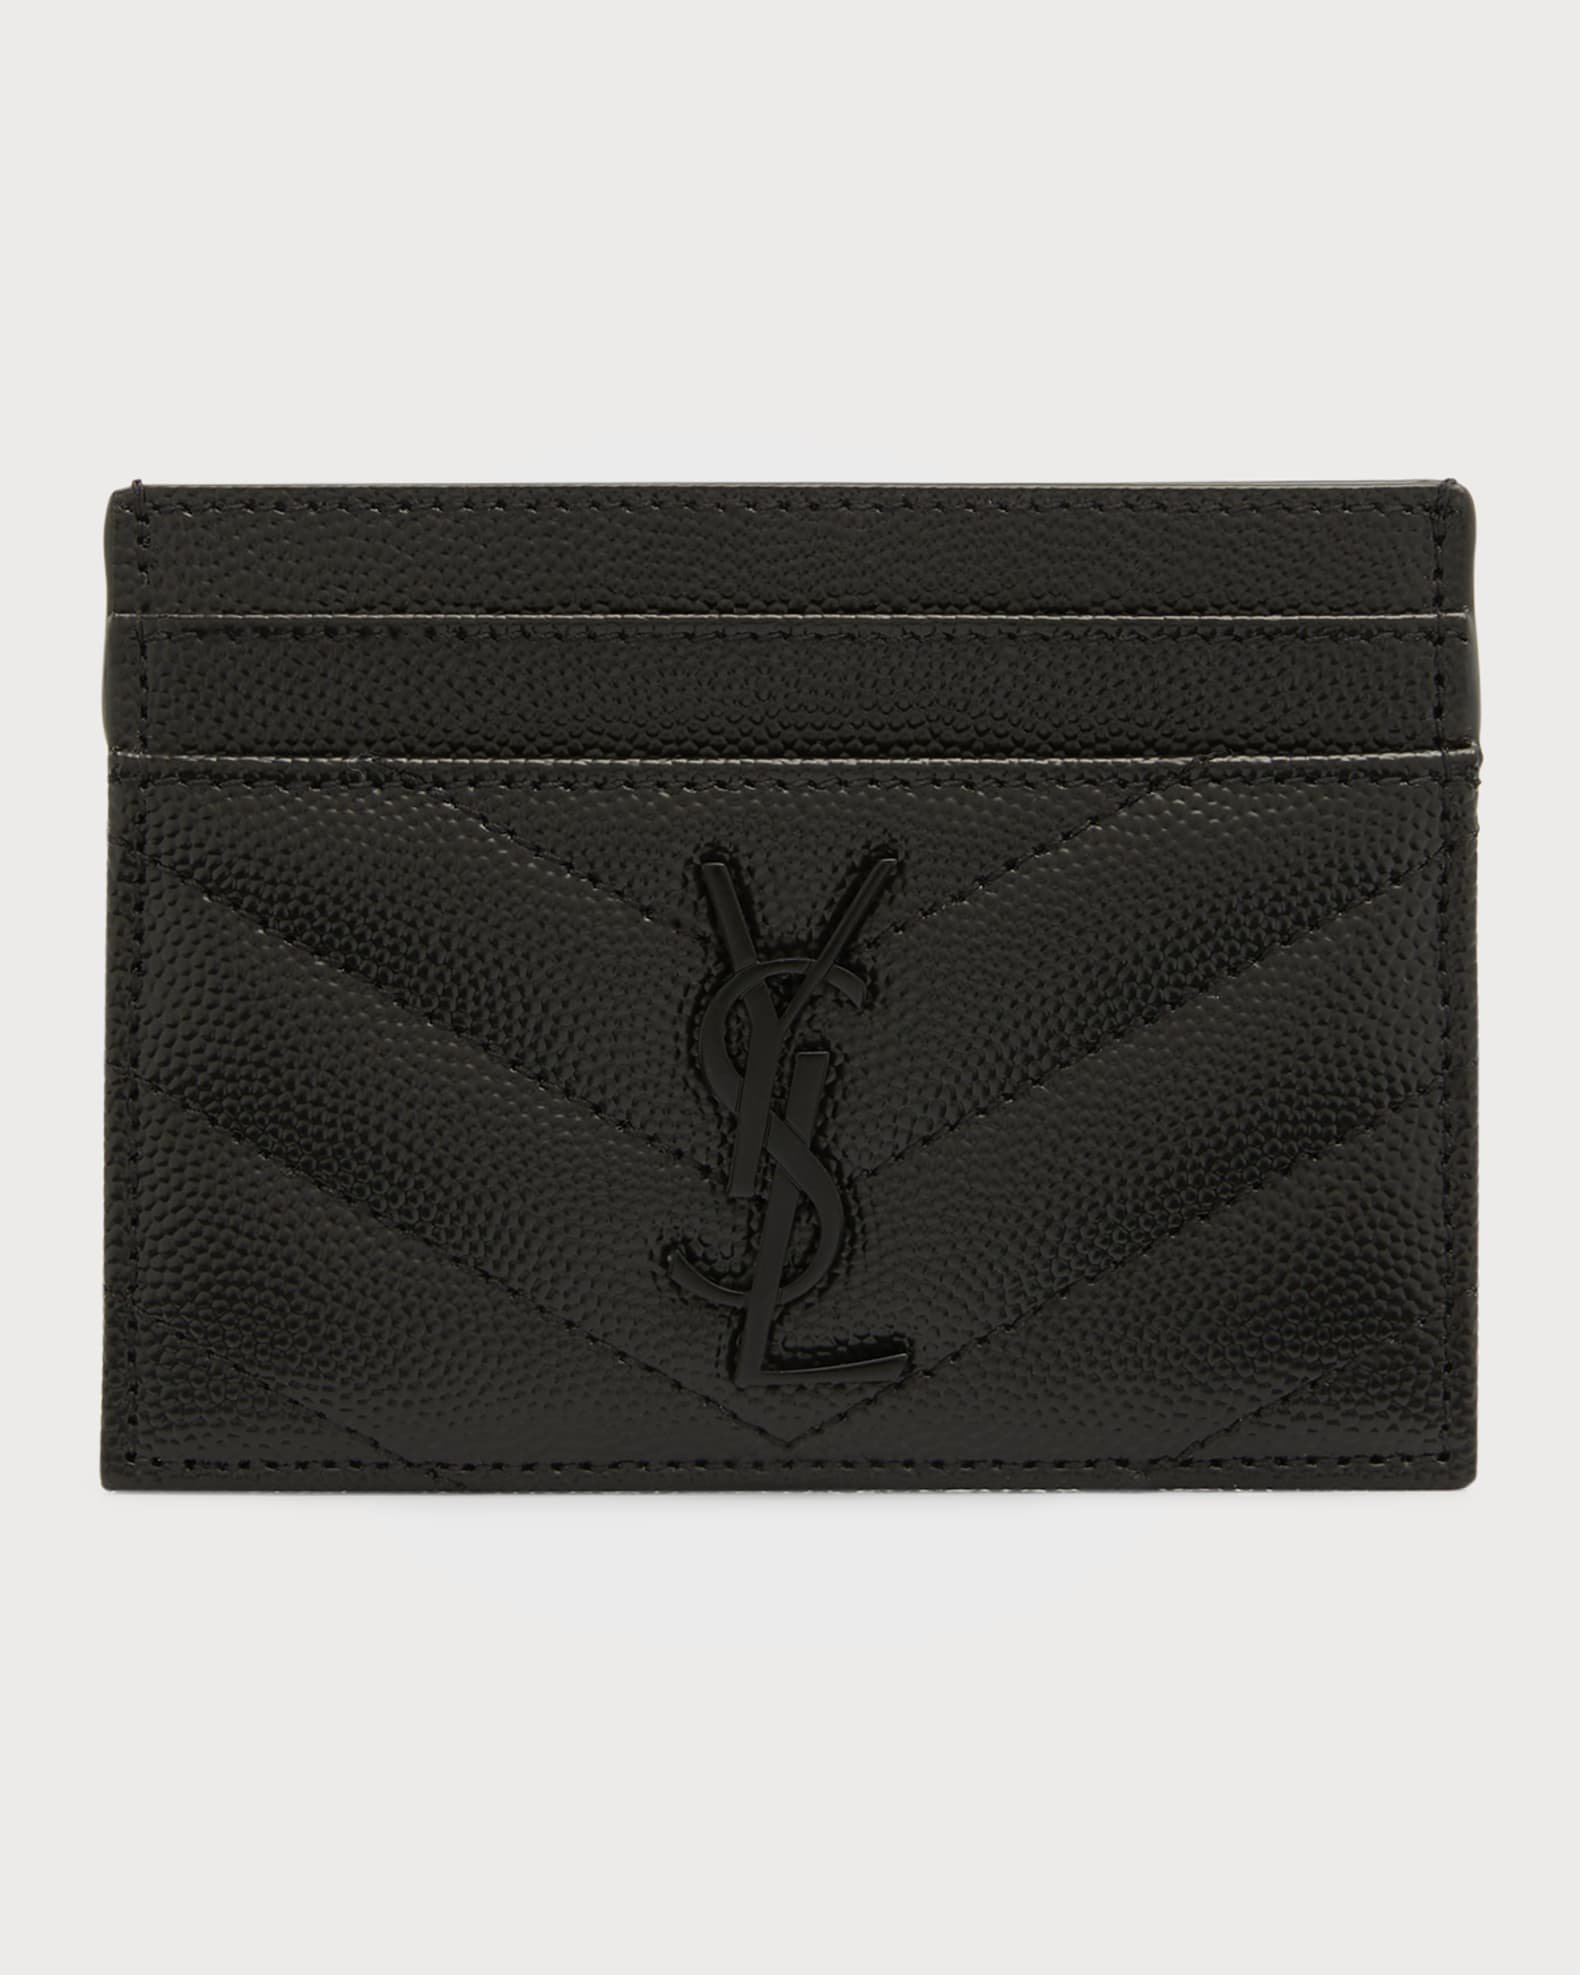 Saint Laurent YSL Monogram Card Case in Grained Leather | Neiman Marcus